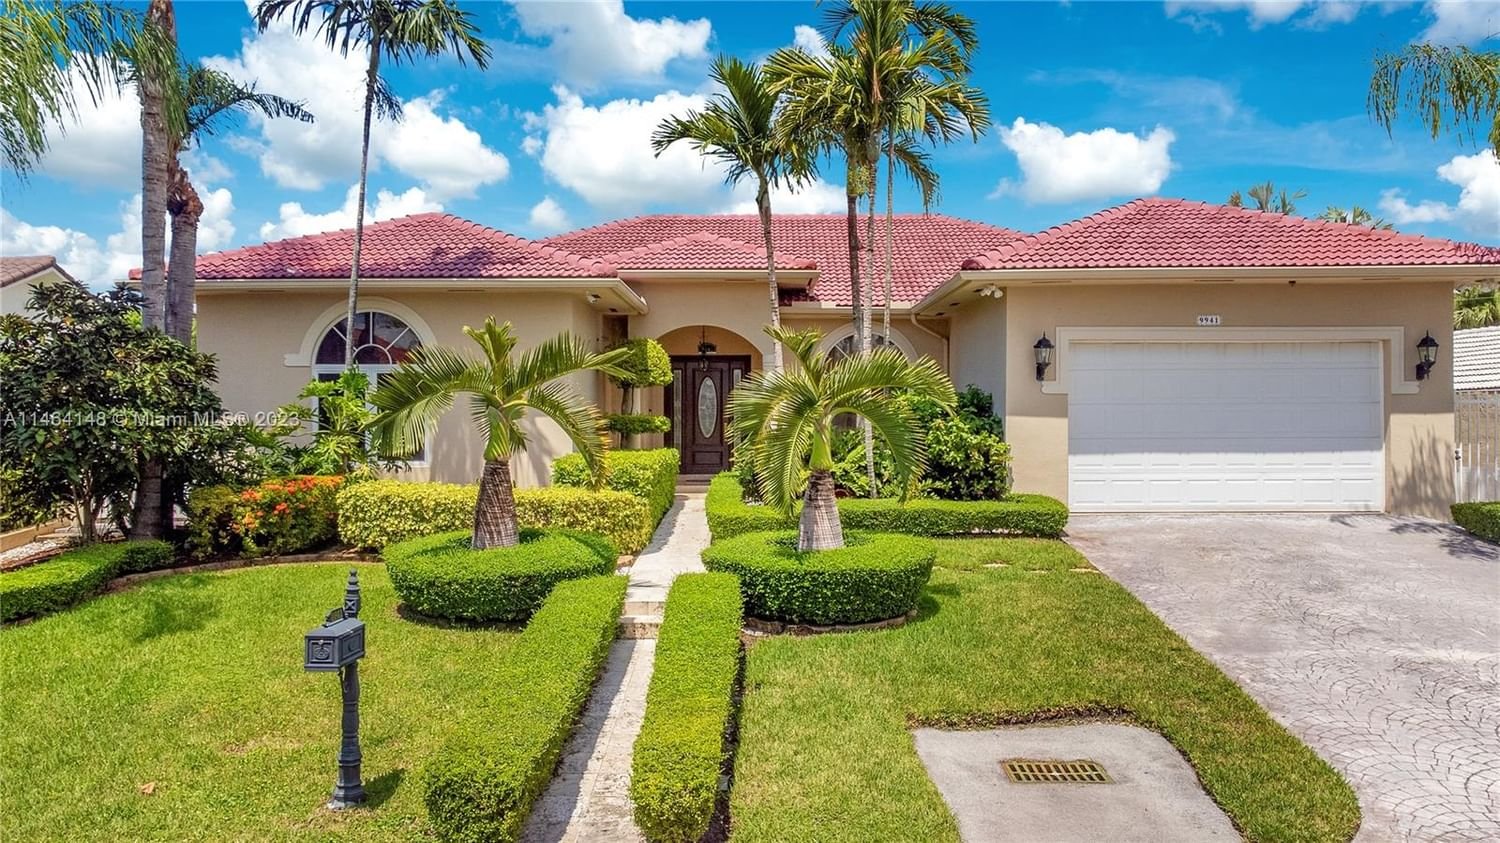 Real estate property located at 9941 27th Ter, Miami-Dade County, VANDERBILT PARK AMD PL, Doral, FL